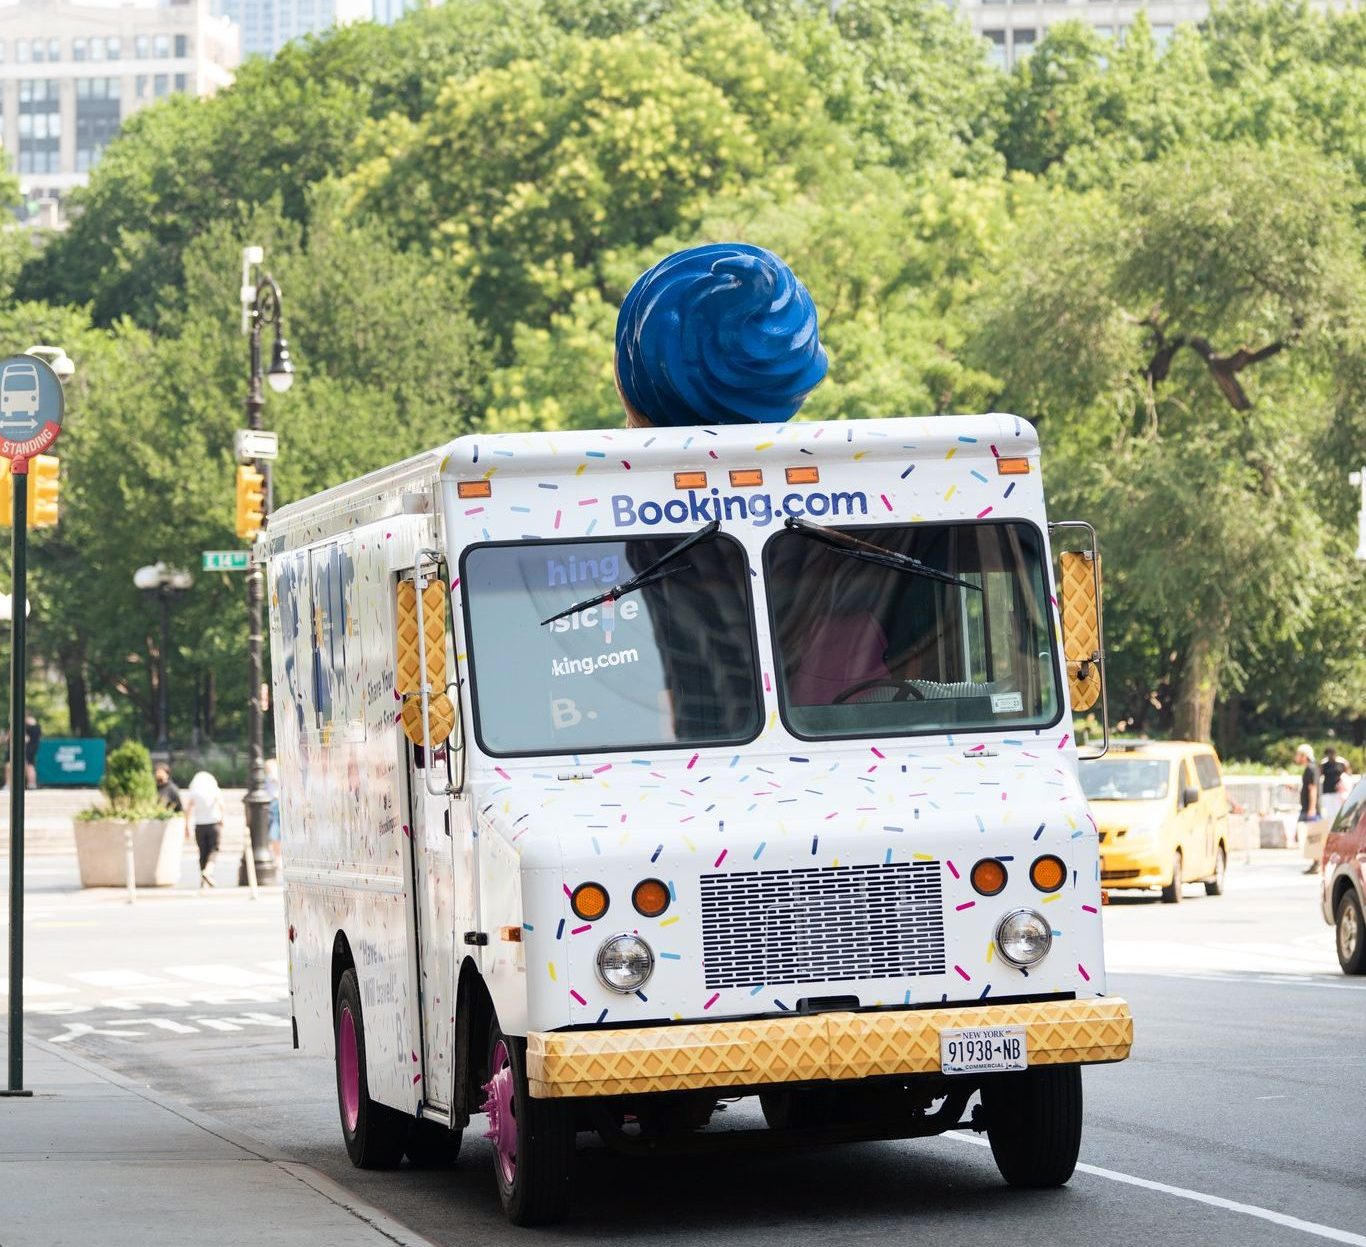 Booking.com ice cream truck in New York City